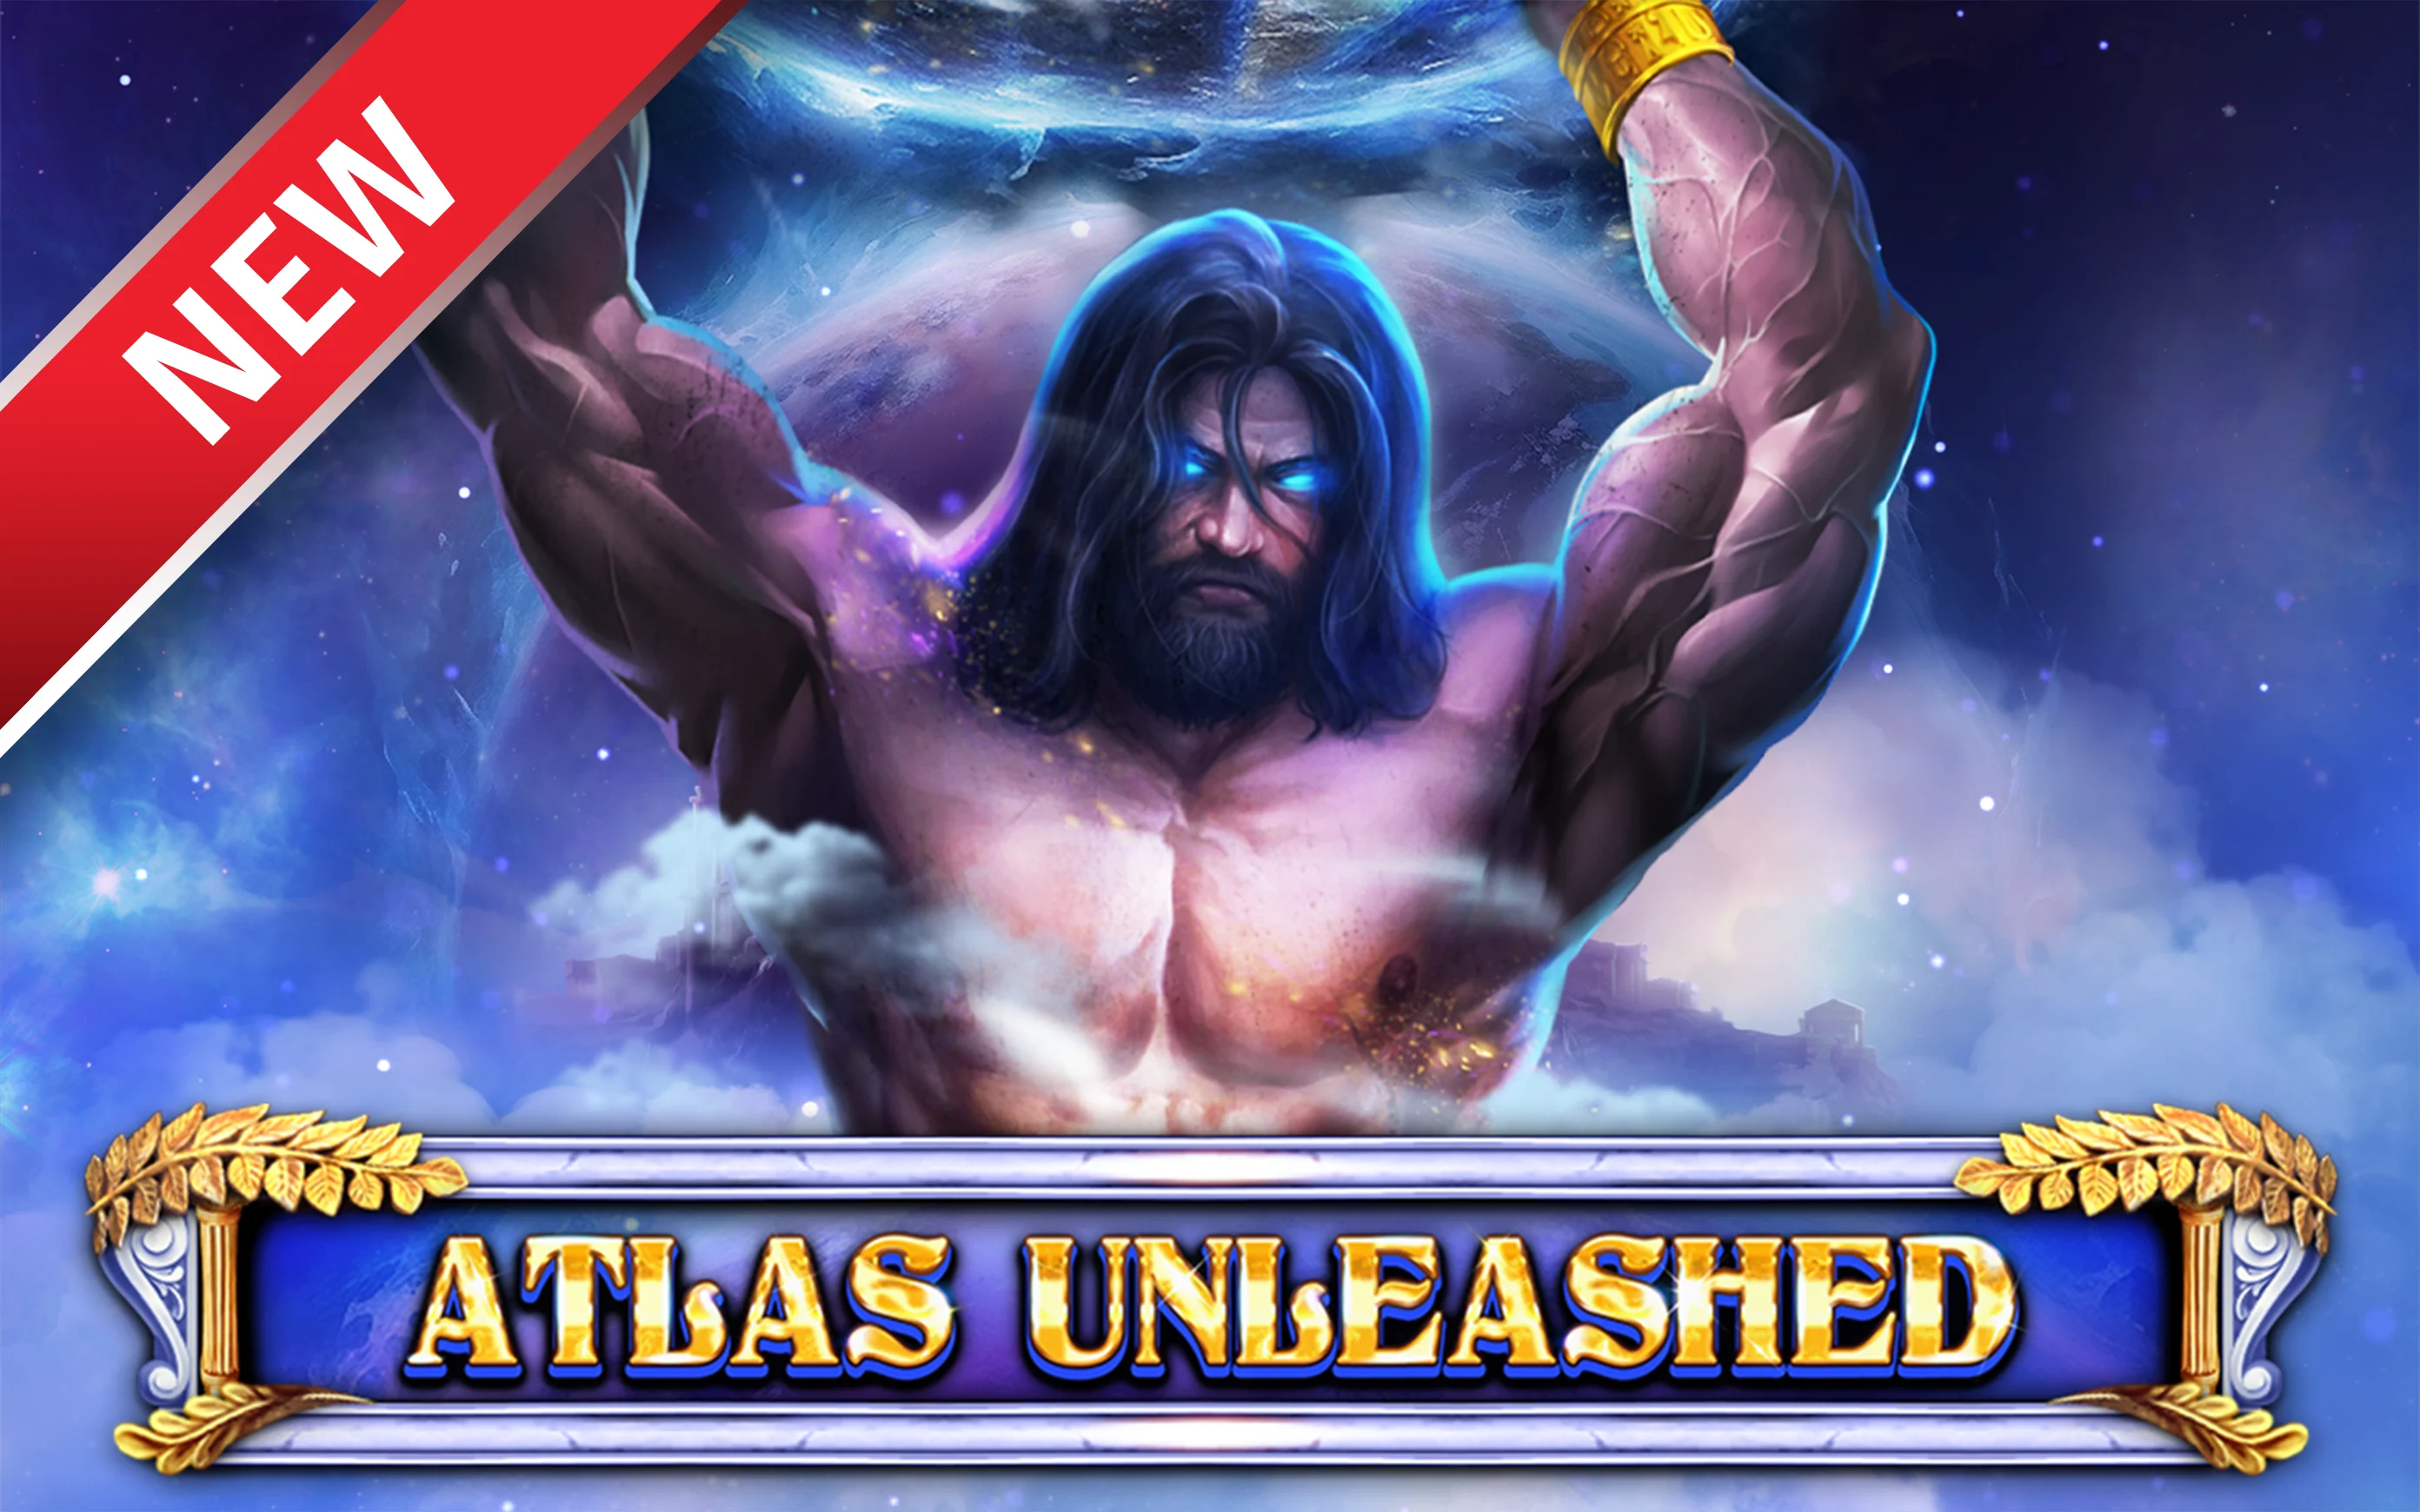 Play Atlas Unleashed on Starcasino.be online casino